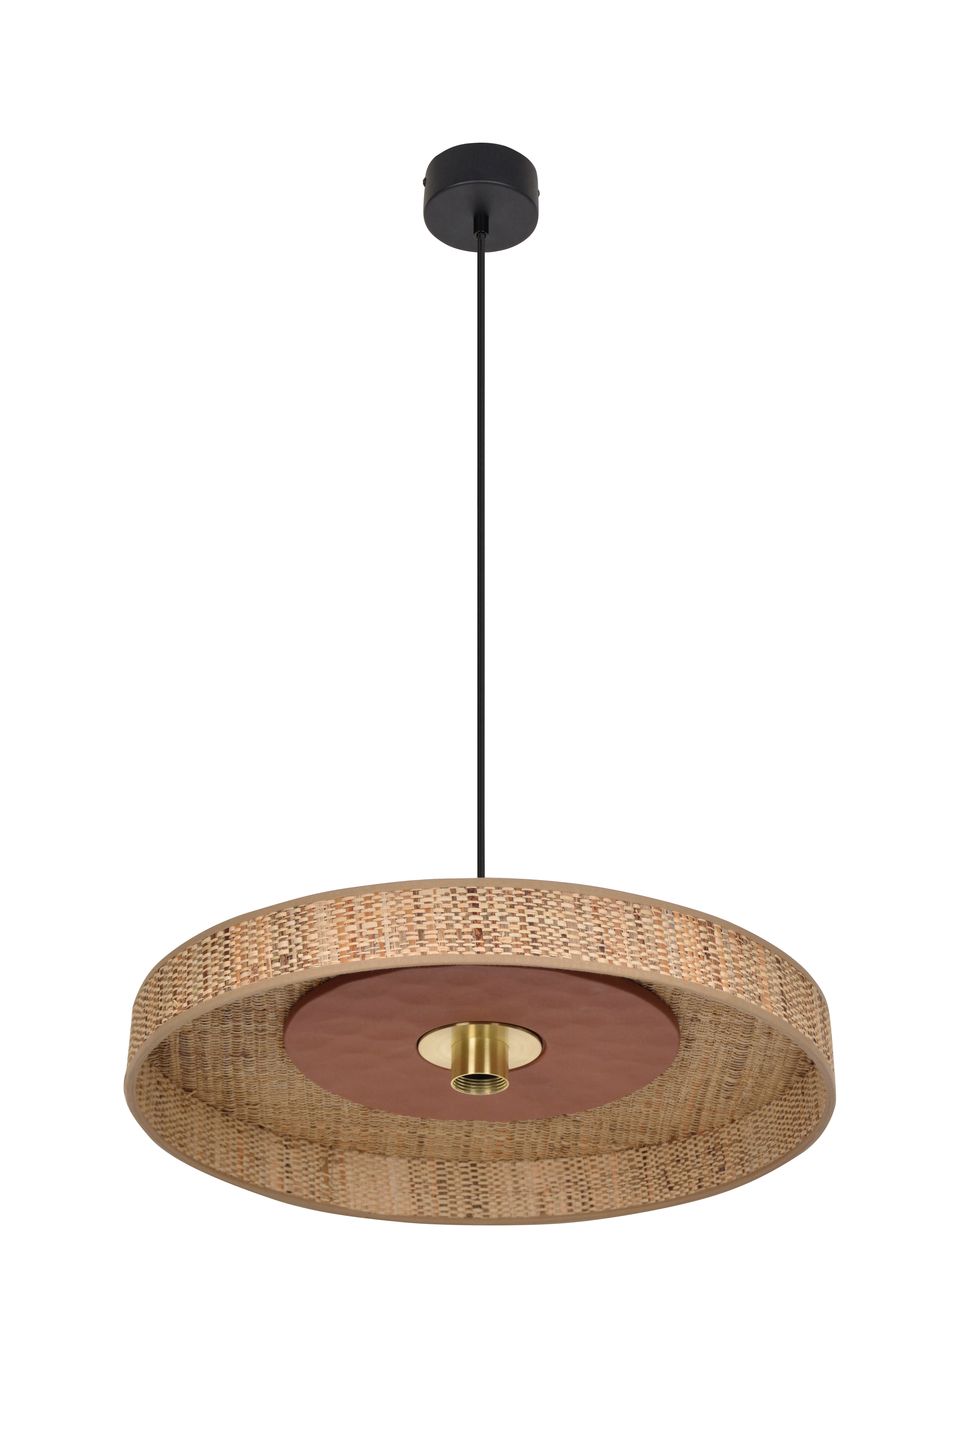 Hanging lamp PORTINATX by Market Set